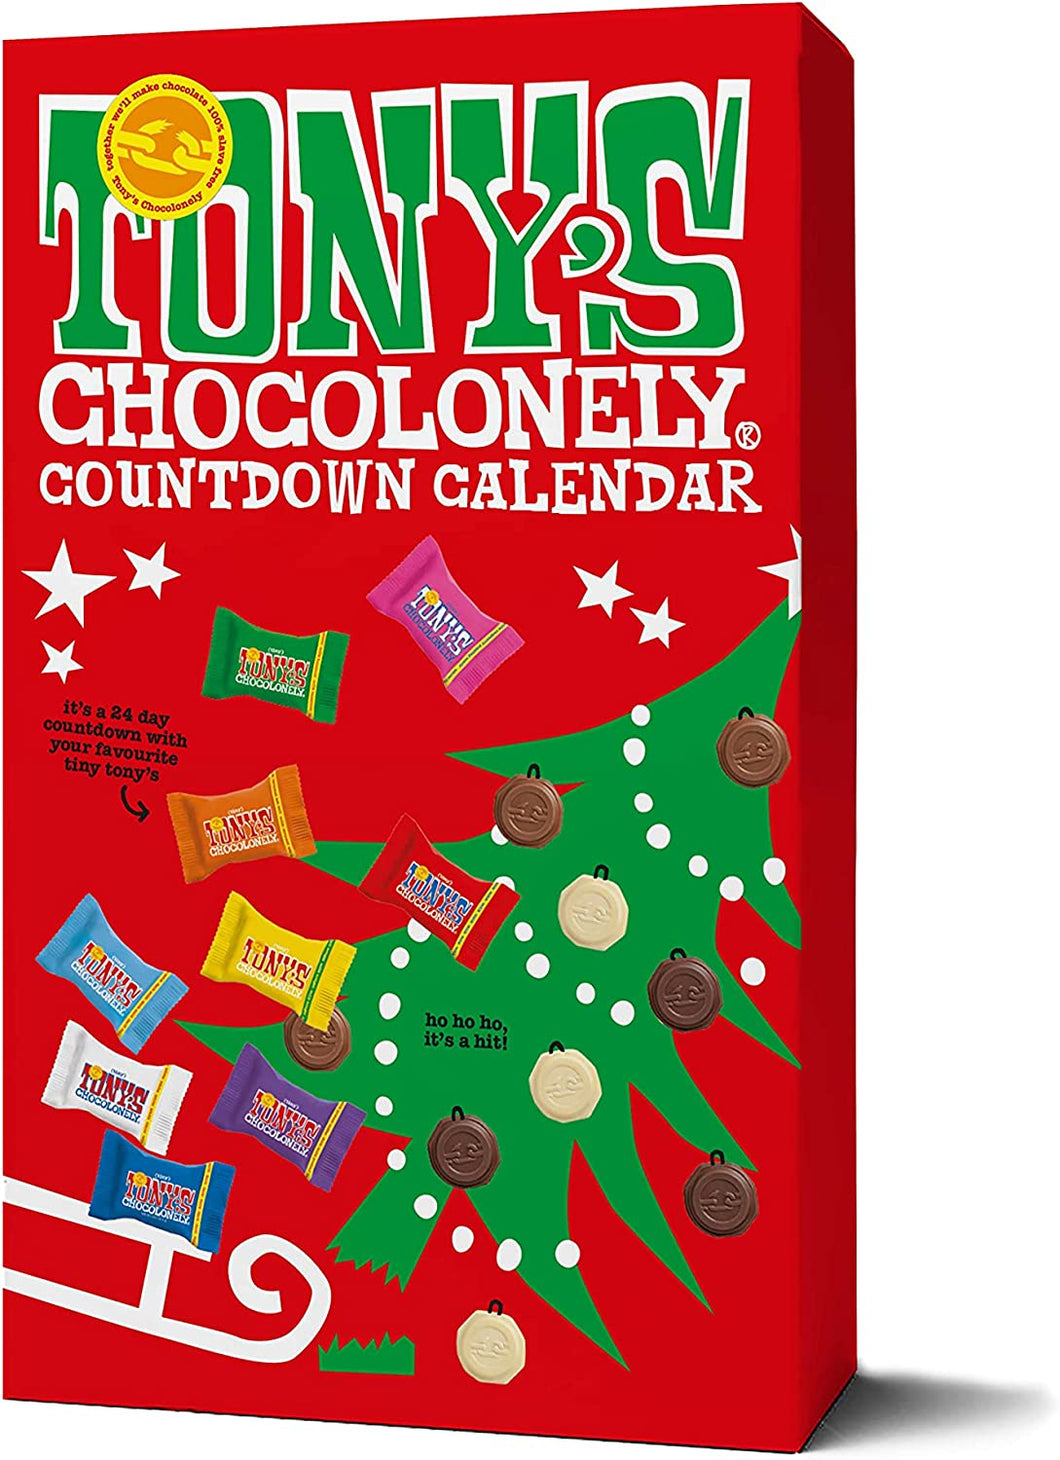 Tony's Chocolonely Countdown Calendar - Life Before Plastic